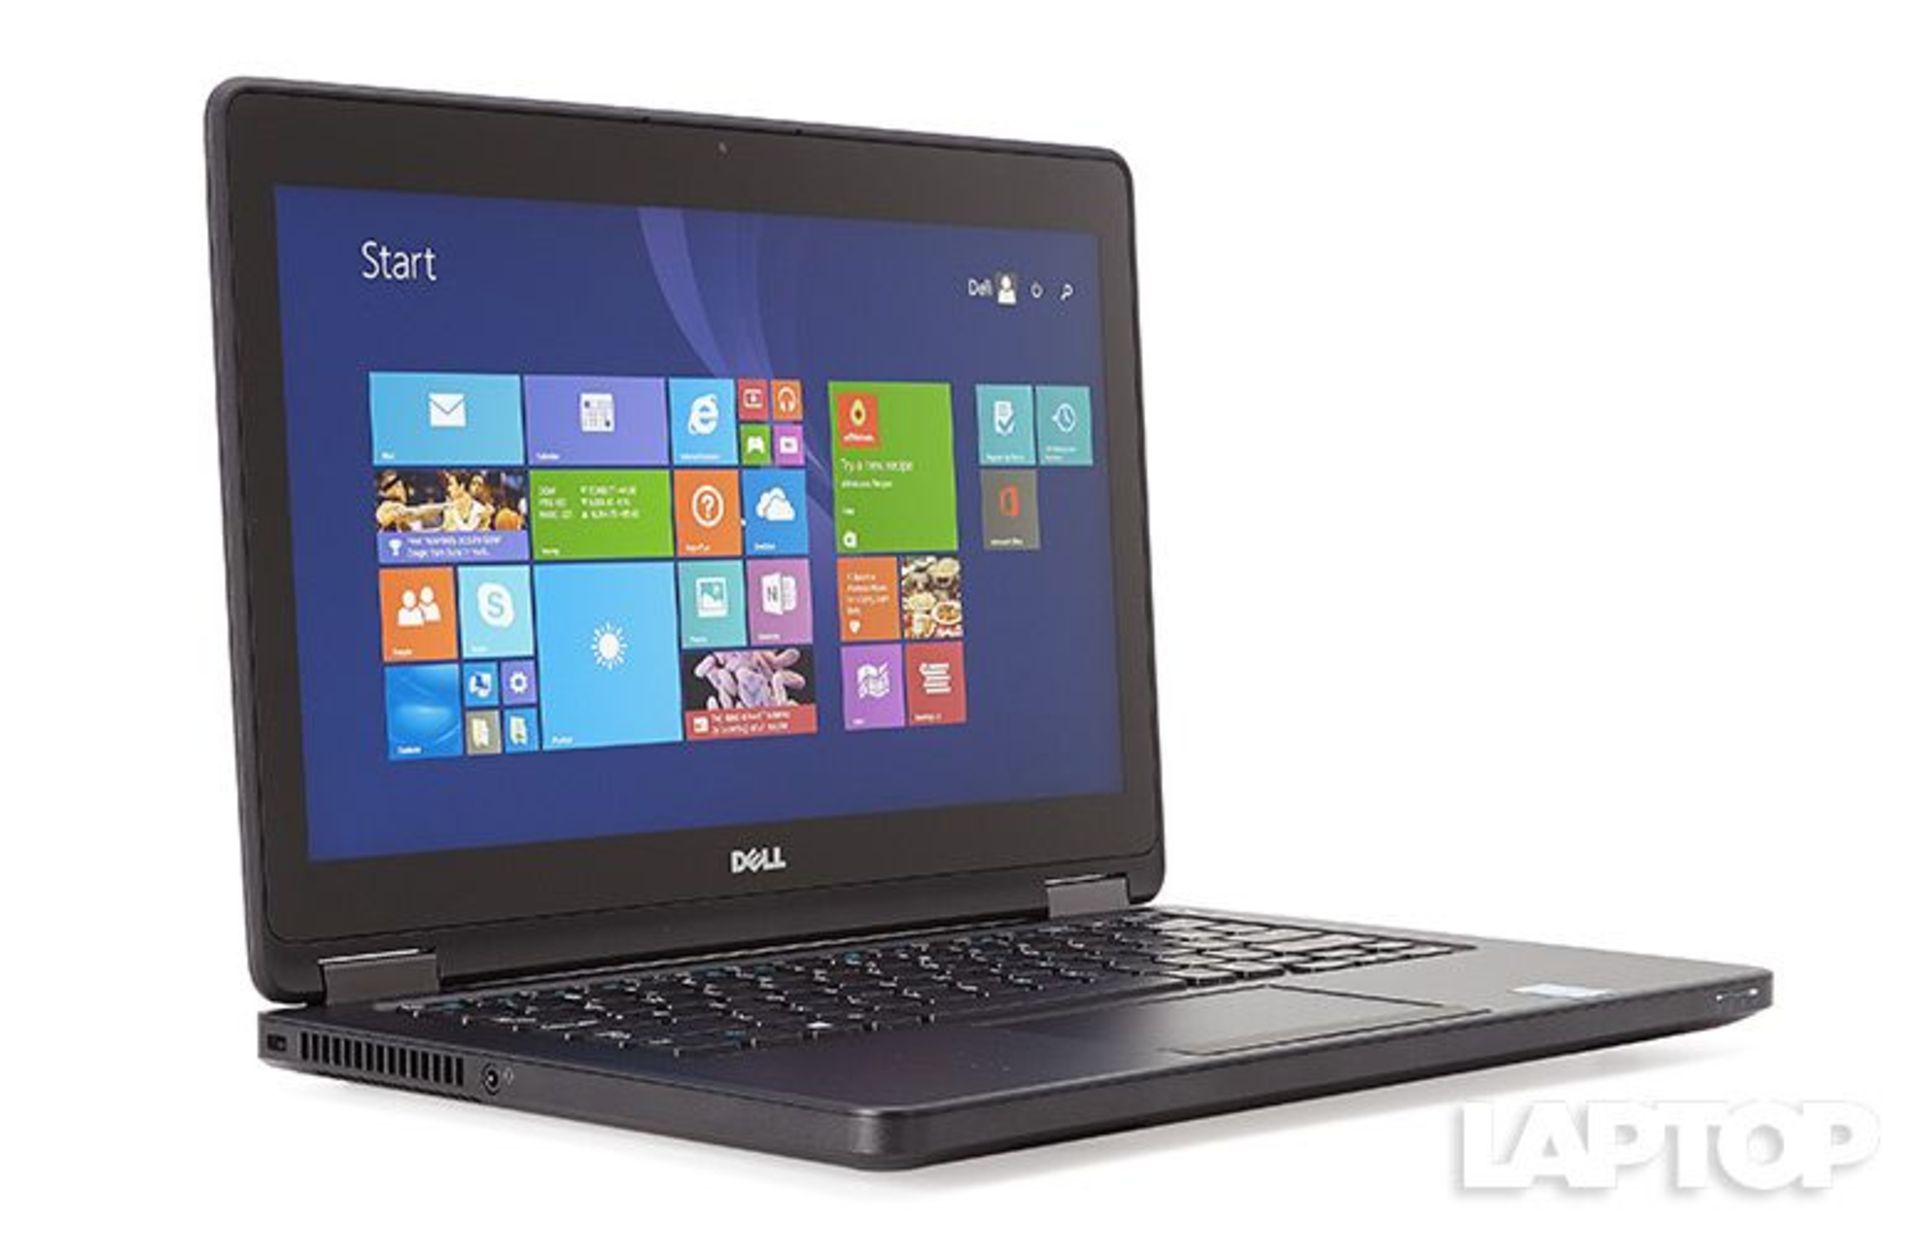 Dell Latitude E5250 Laptop Black RRP £550. 2.